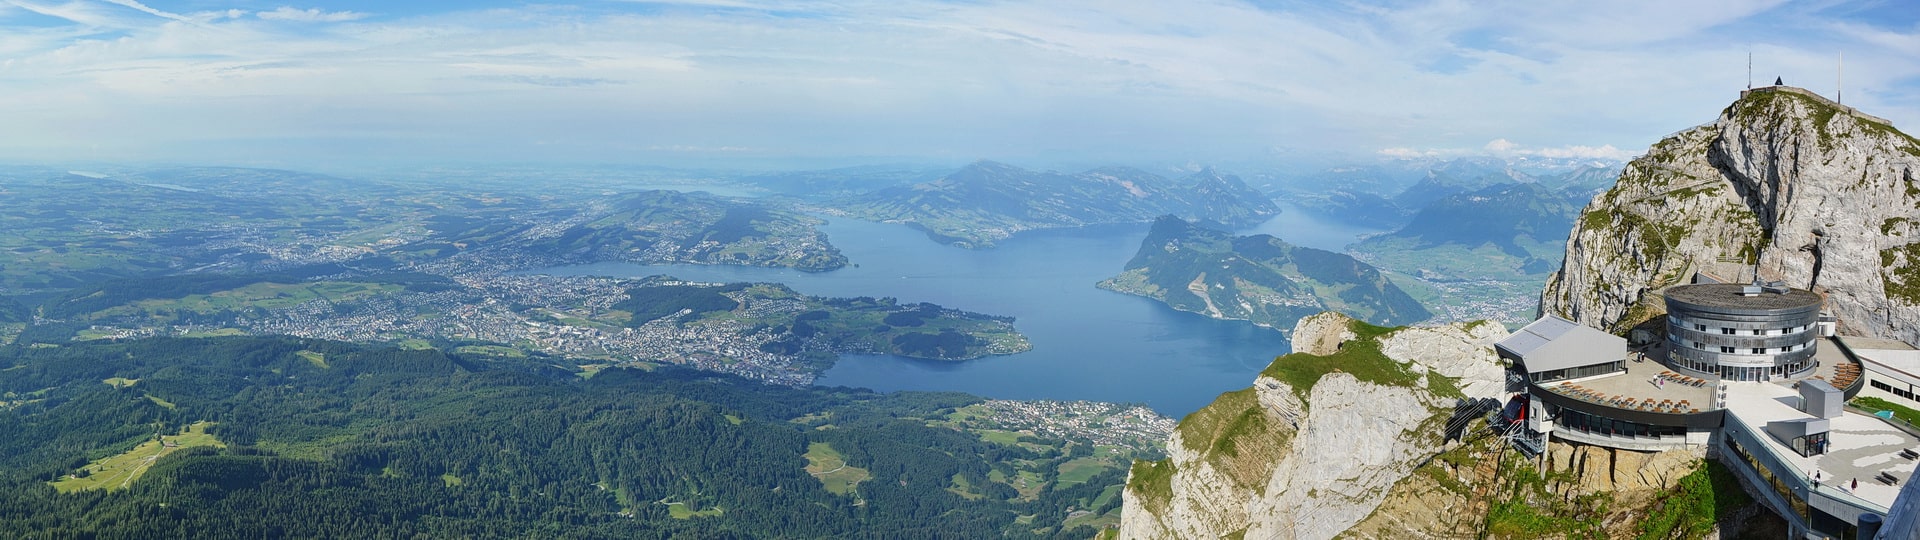 View from Mount Pilatus, Lucerne, Switzerland